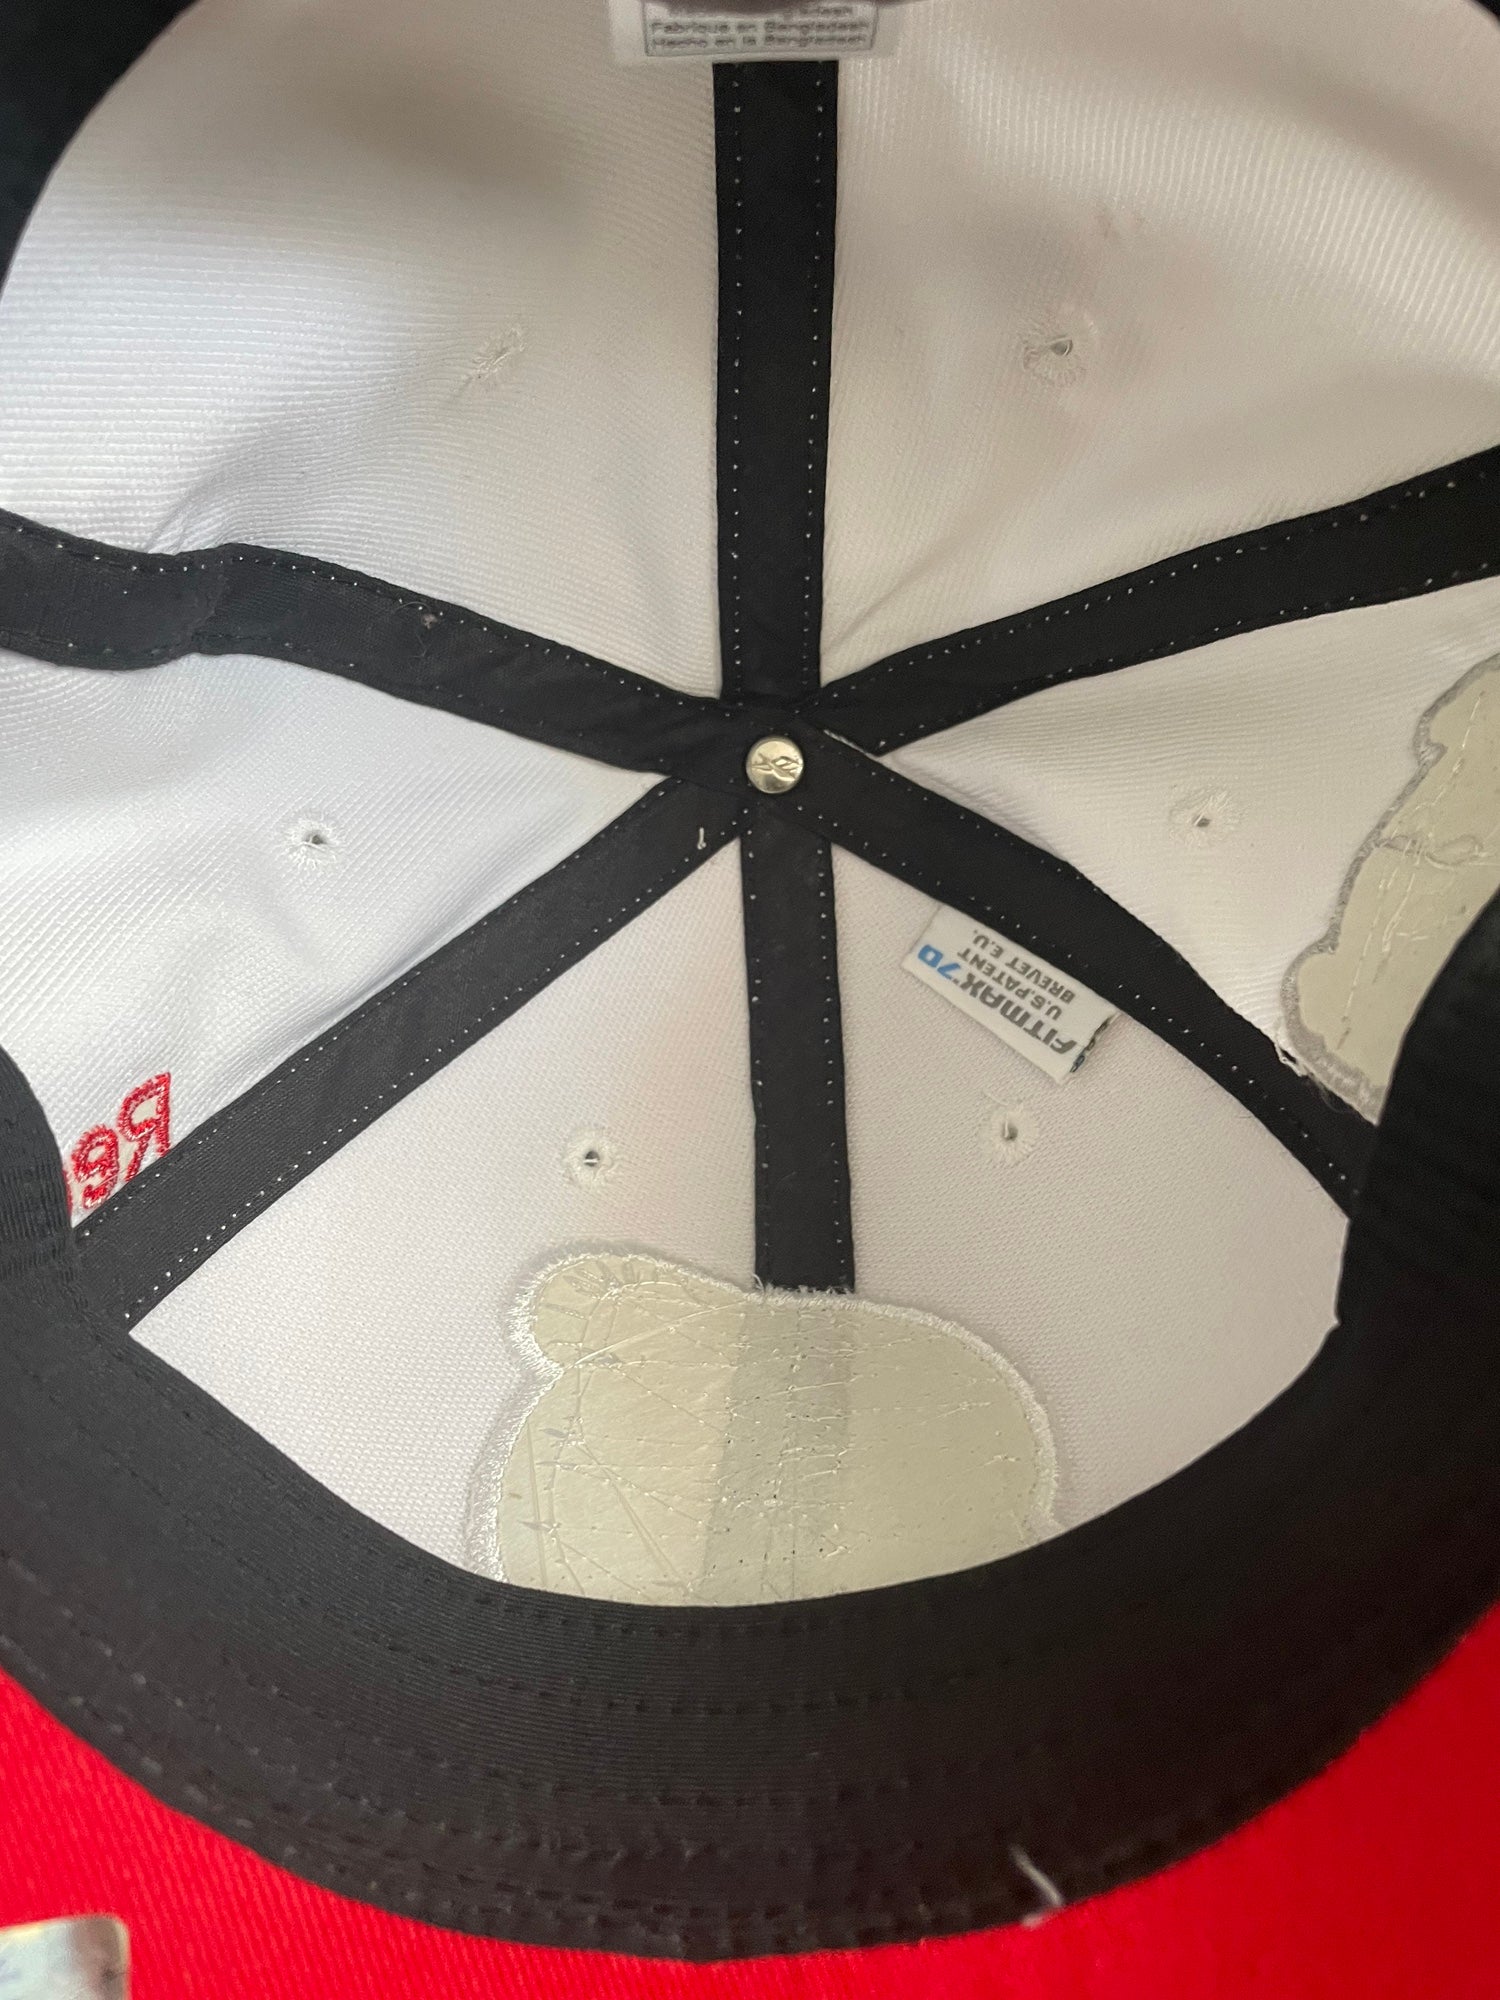  Reebok New Jersey Devils White Basic Logo Slouch Hat - EA99Z :  Baseball Caps : Sports & Outdoors